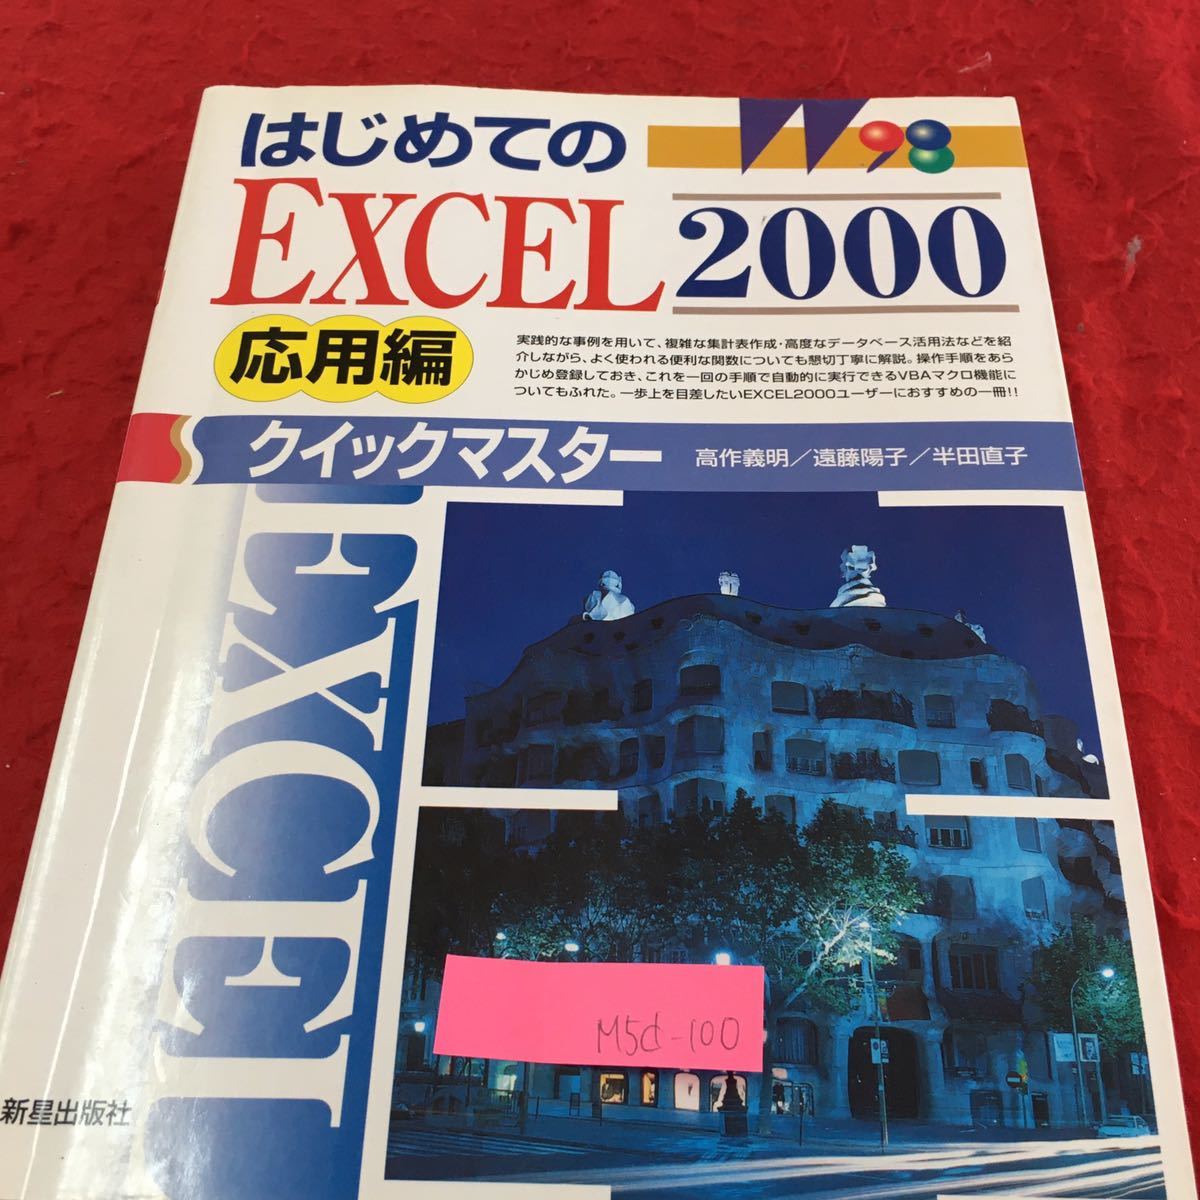 M5d-100 はじめての Excel 2000 応用編 クイックマスター 商品コード表の作成 売り上げ伝票表の作成 2001年3月25日発行_画像1